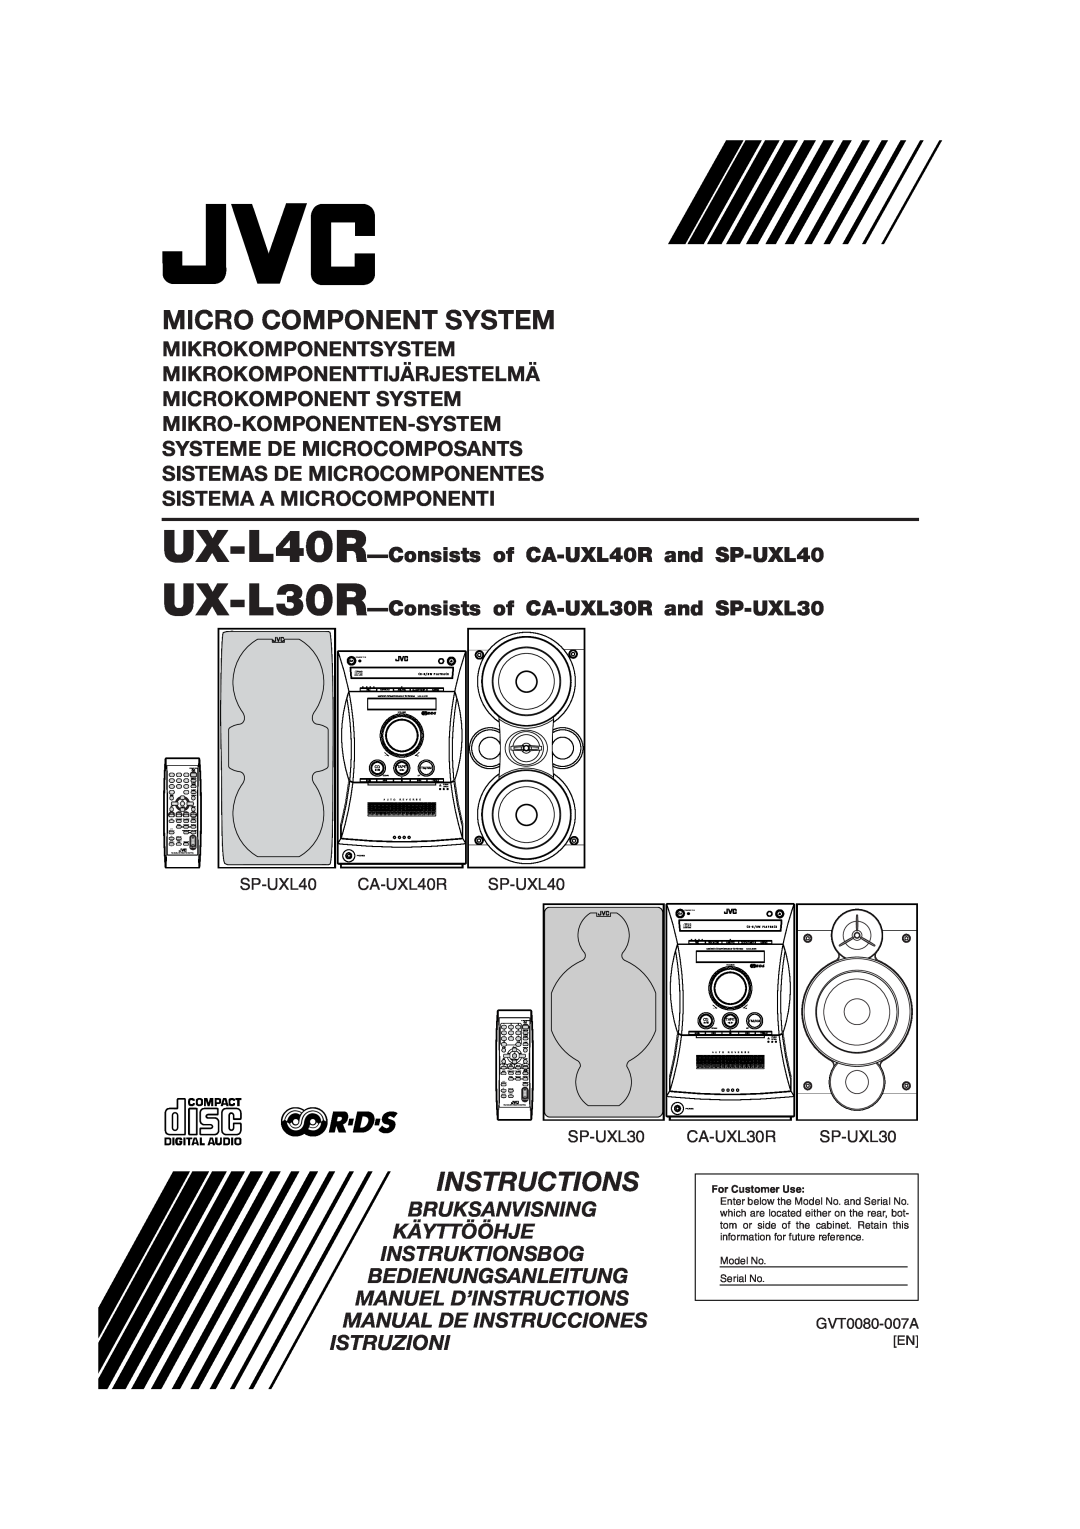 JVC UX-L30R manual GVT0080-007A, Micro Component System, Instructions, Mikrokomponentsystem Mikrokomponenttijärjestelmä 